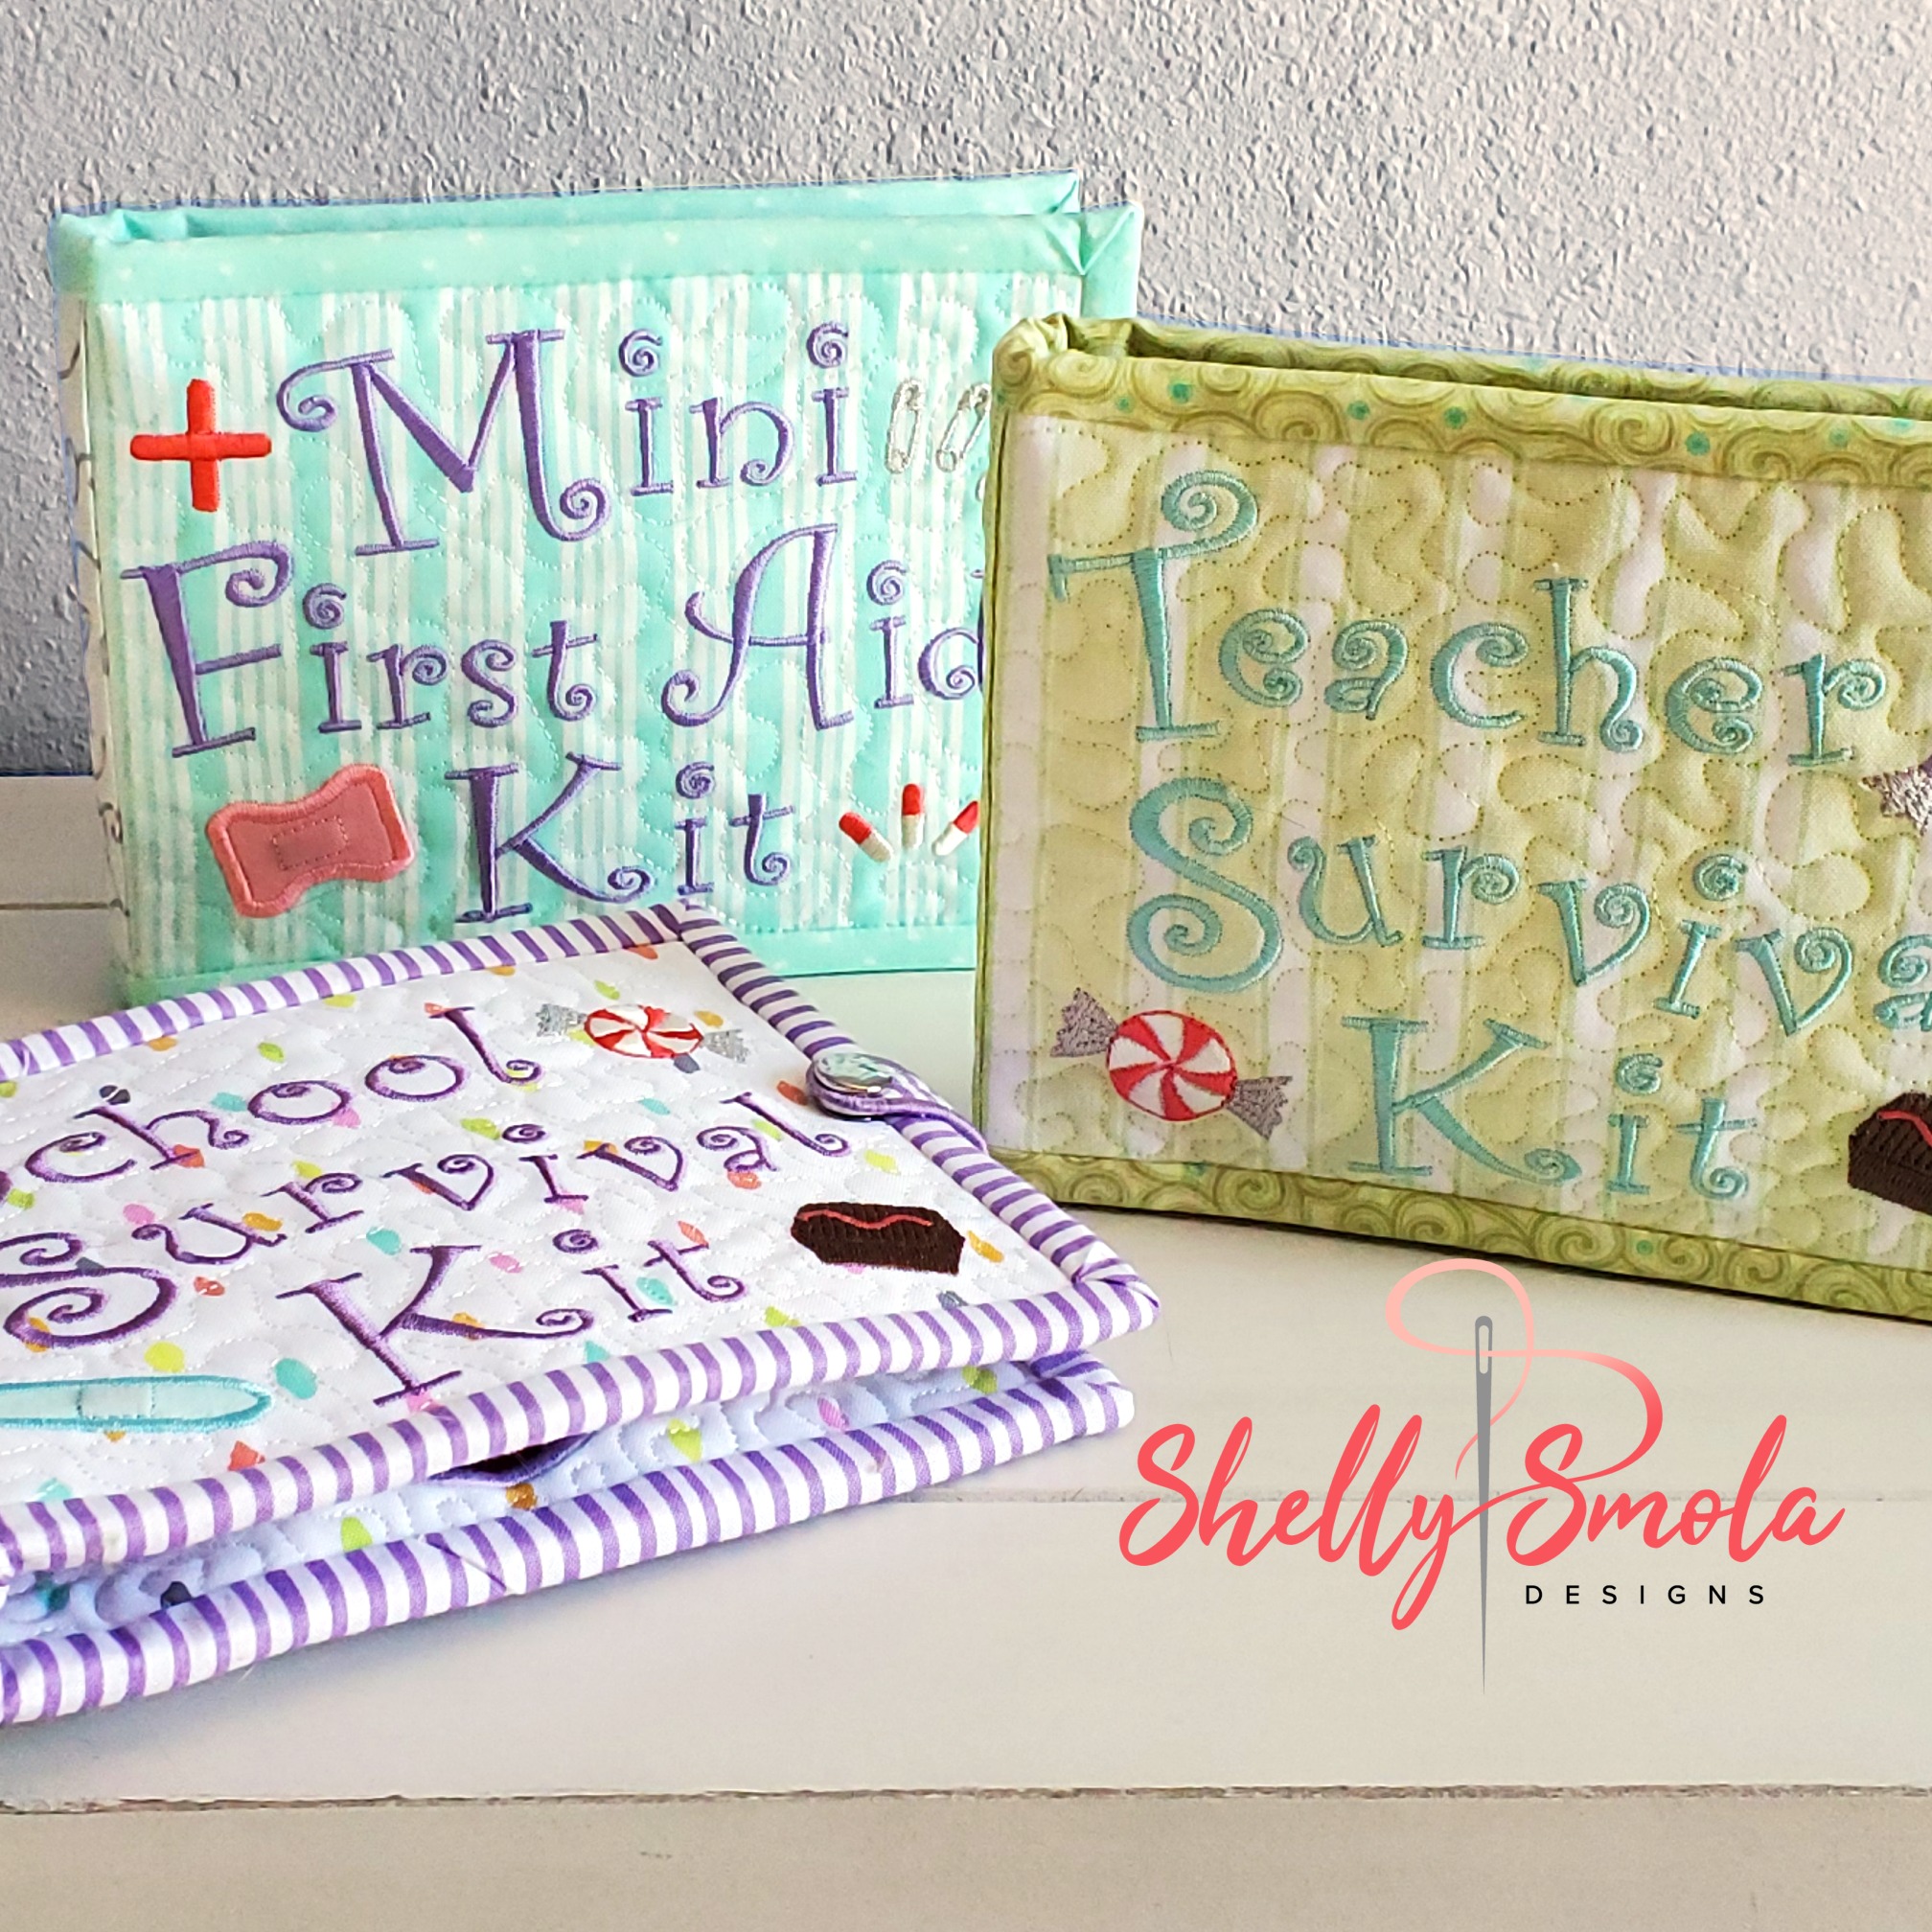 Sassy Survival Kit by Shelly Smola Designs